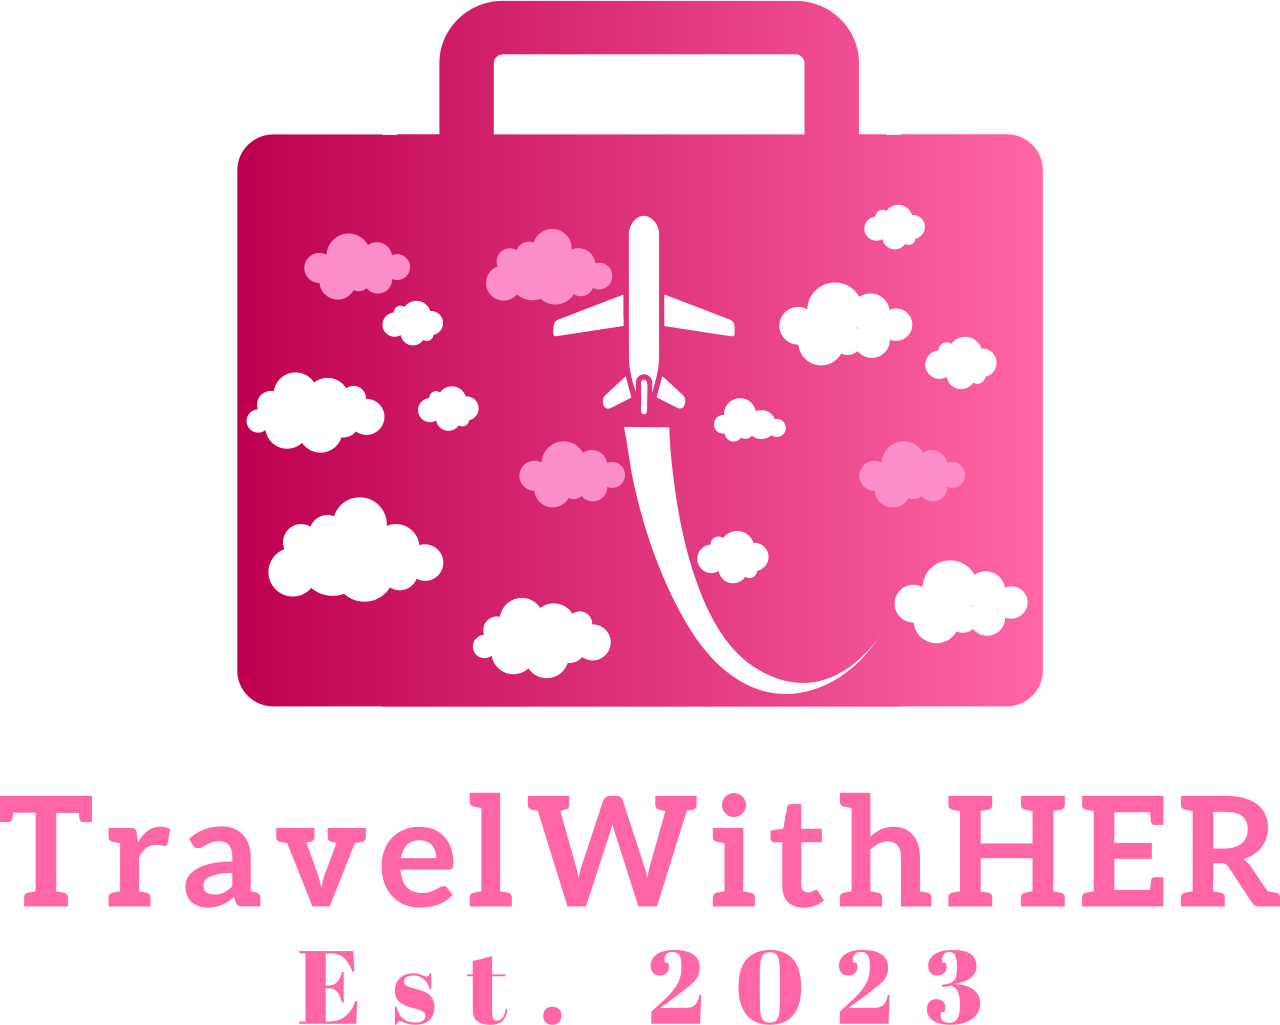 TravelWithHER's logo